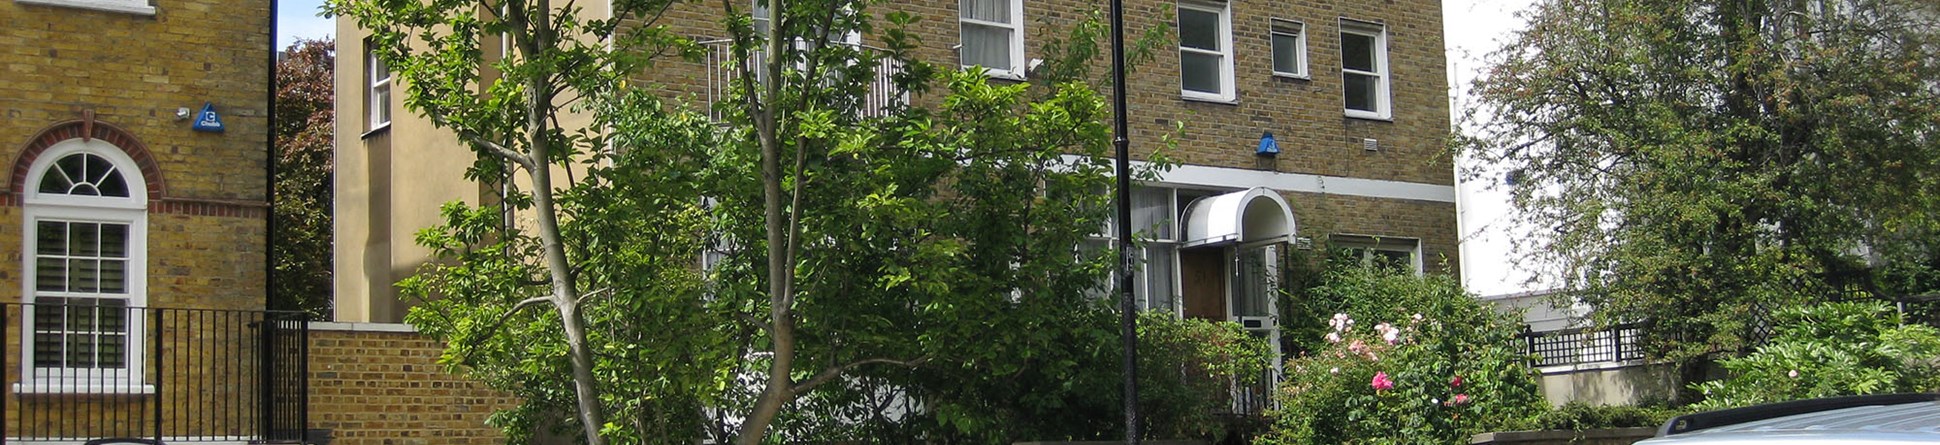 1950s house at 52 Campden Hill Road, Kensington